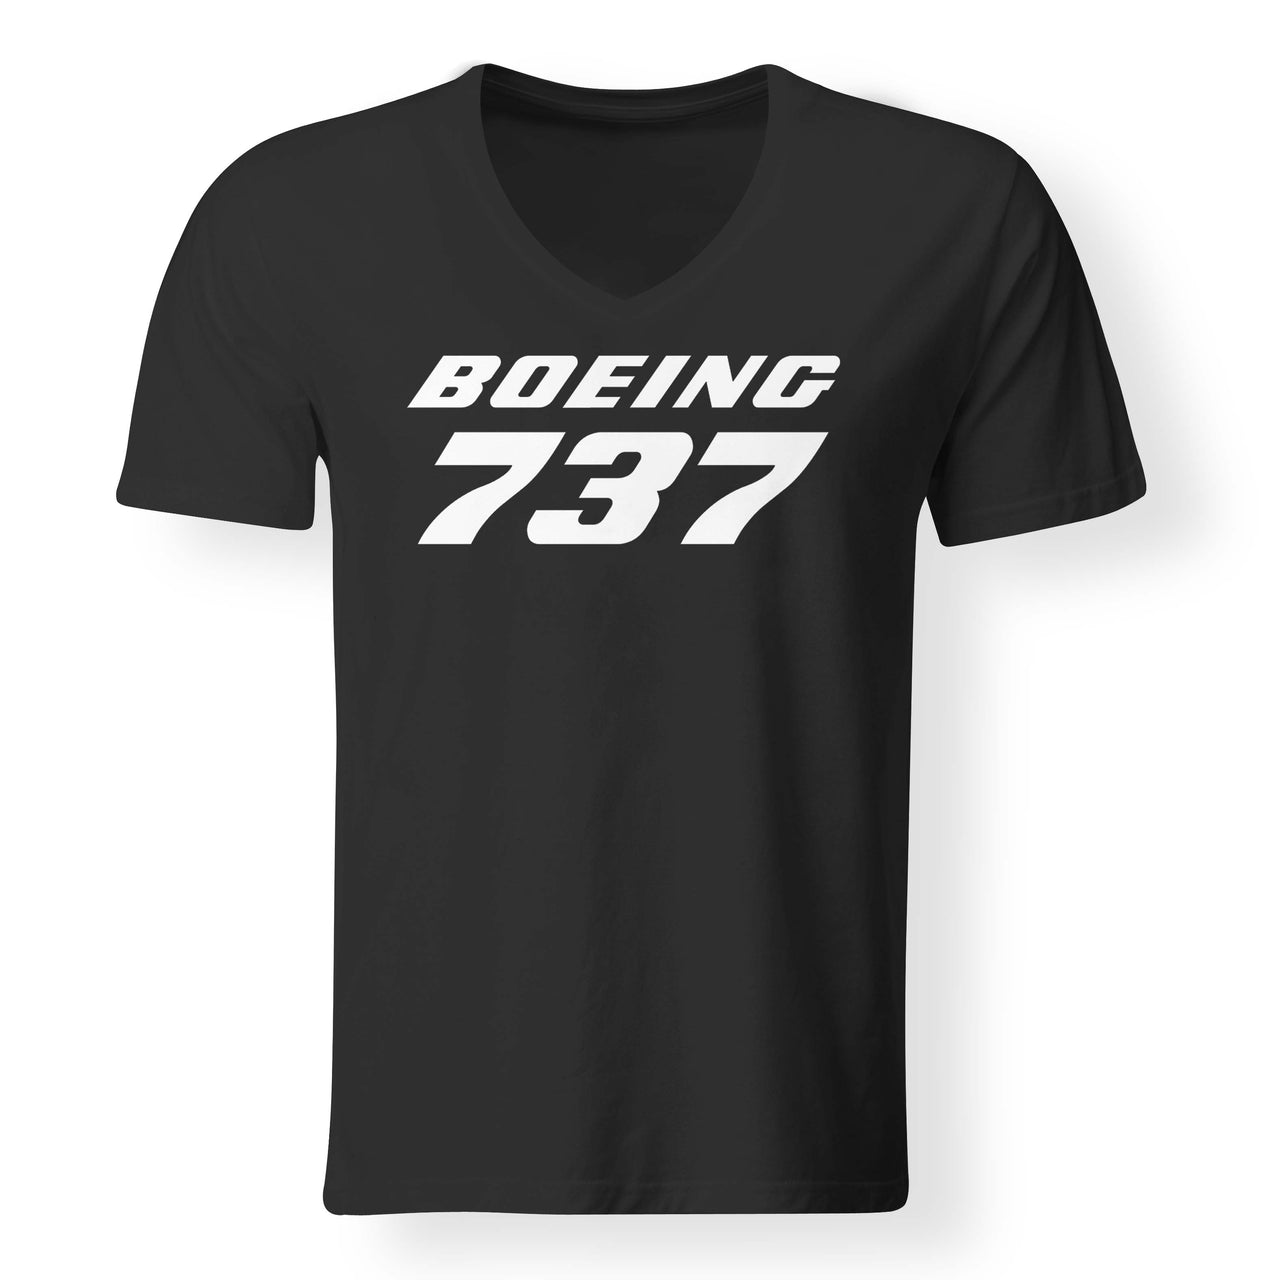 Boeing 737 & Text Designed V-Neck T-Shirts